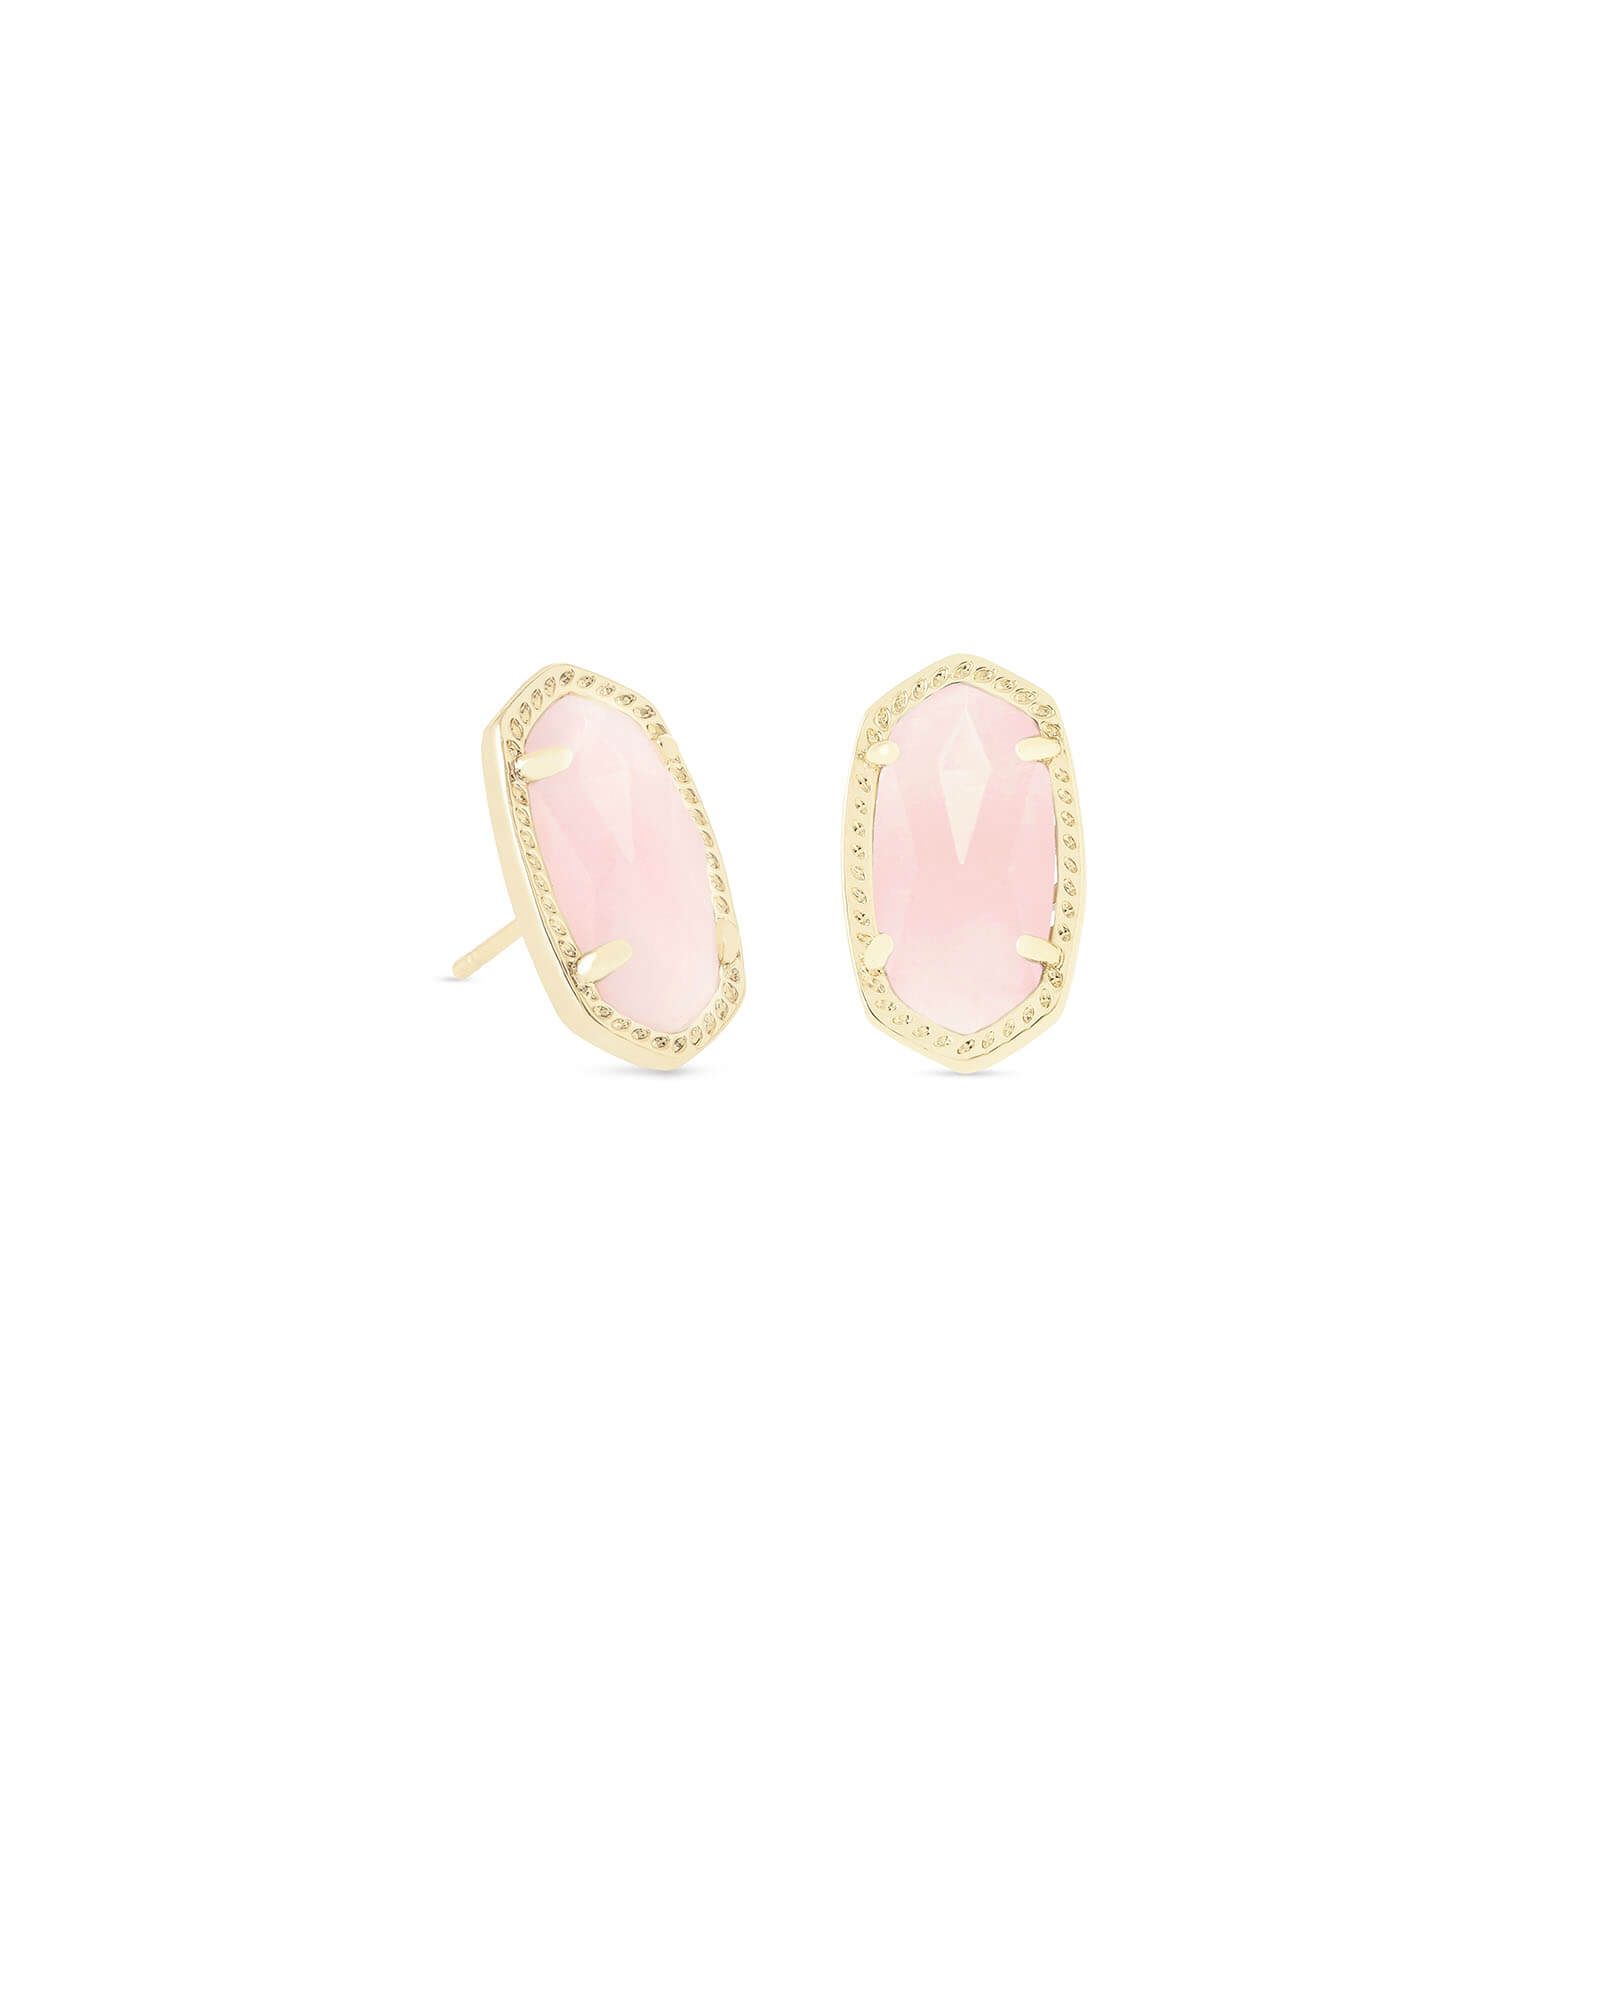 Ellie Gold Stud Earrings in Rose Quartz | Kendra Scott